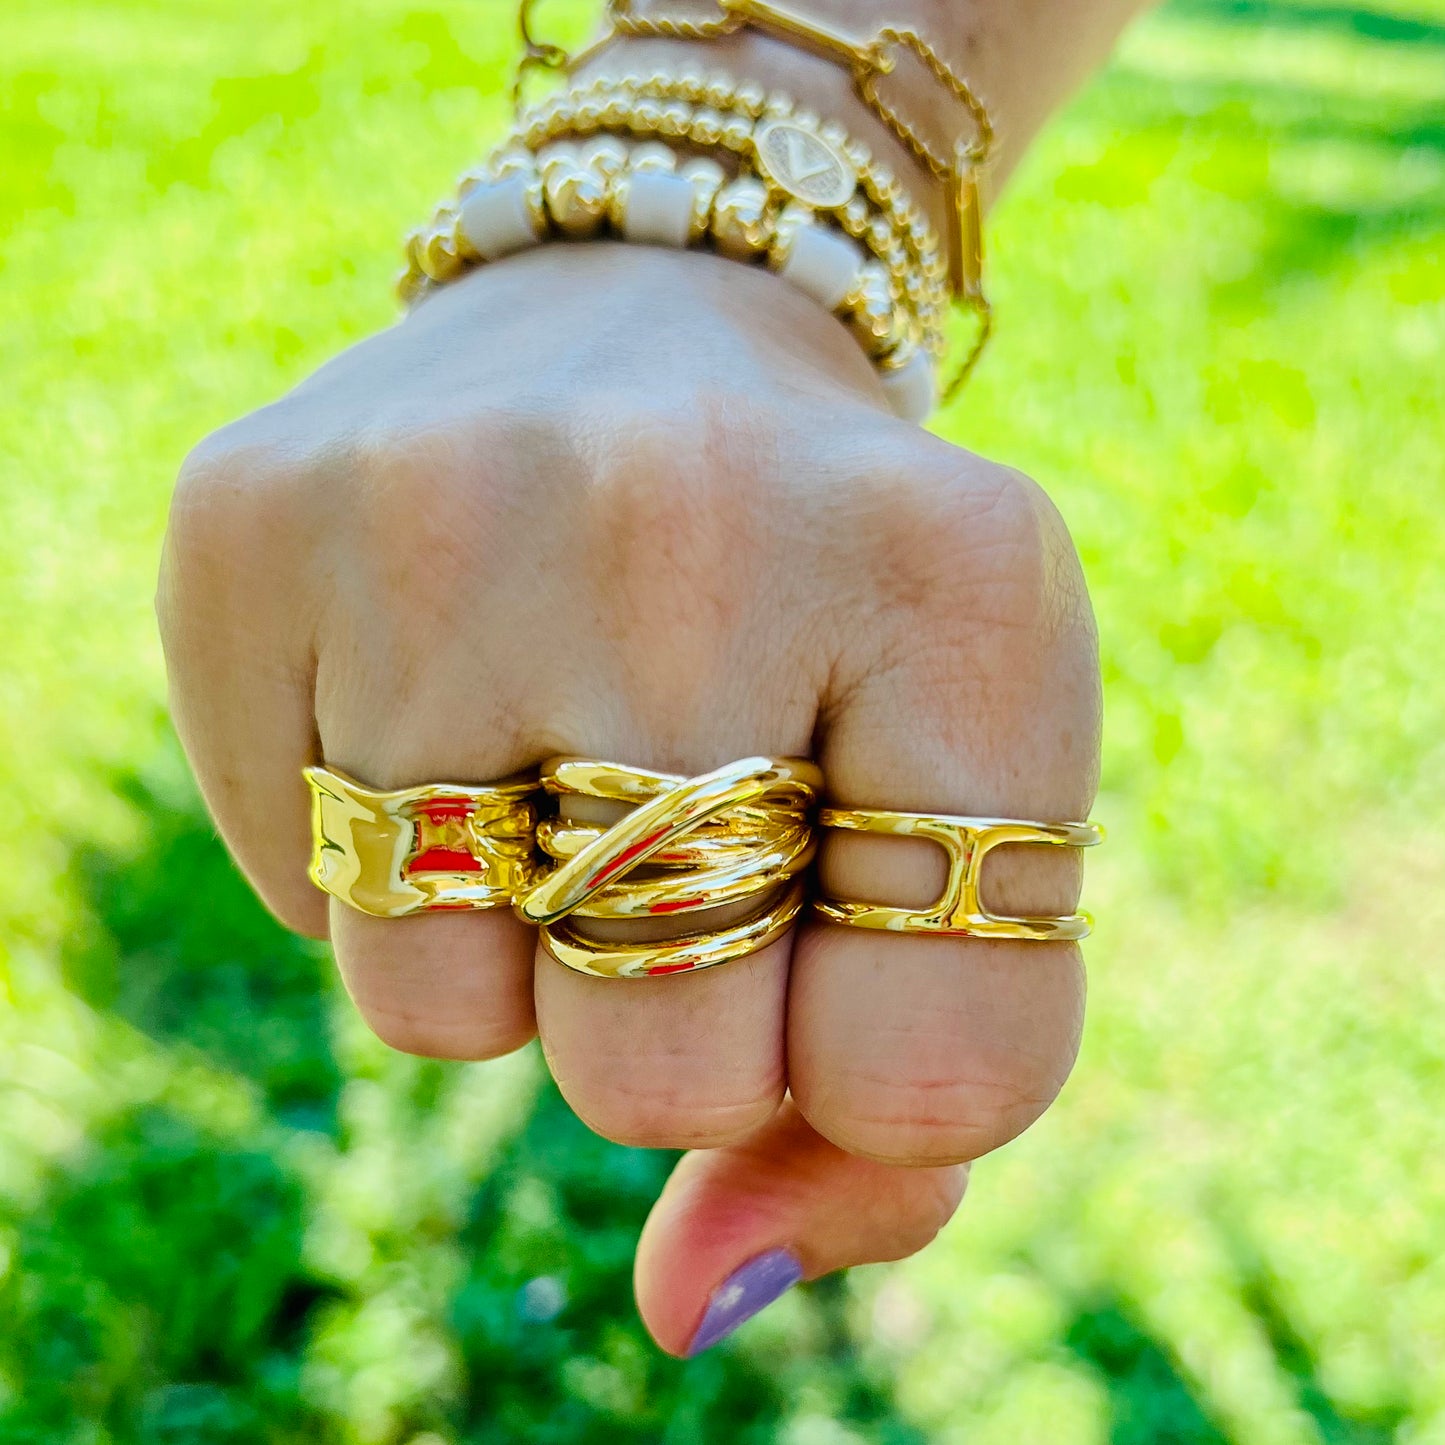 Anchor Gold Ring